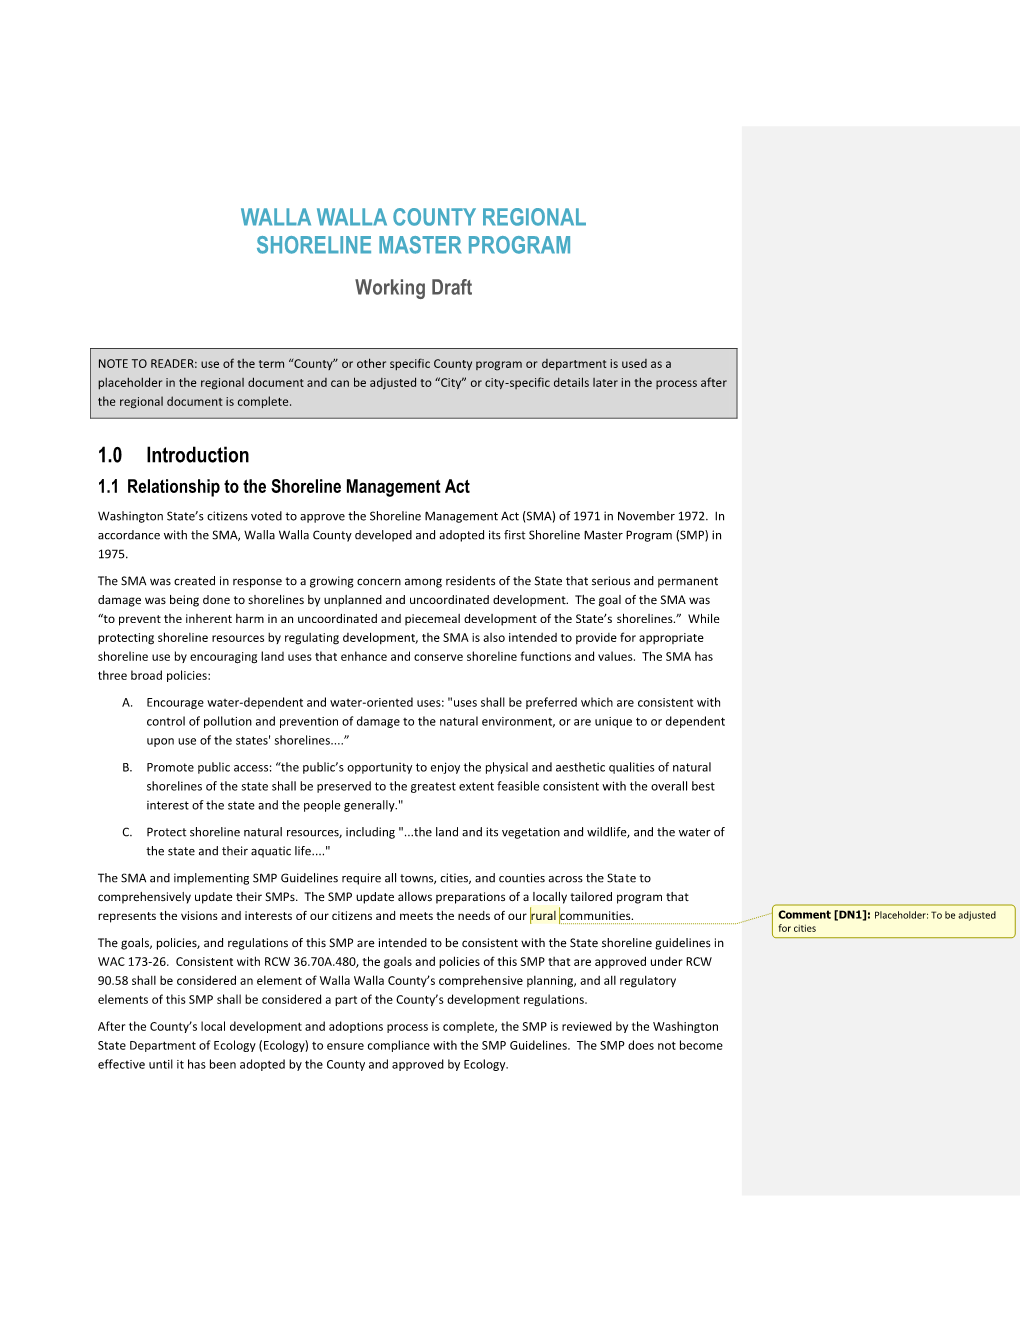 WALLA WALLA COUNTY REGIONAL SHORELINE MASTER PROGRAM Working Draft